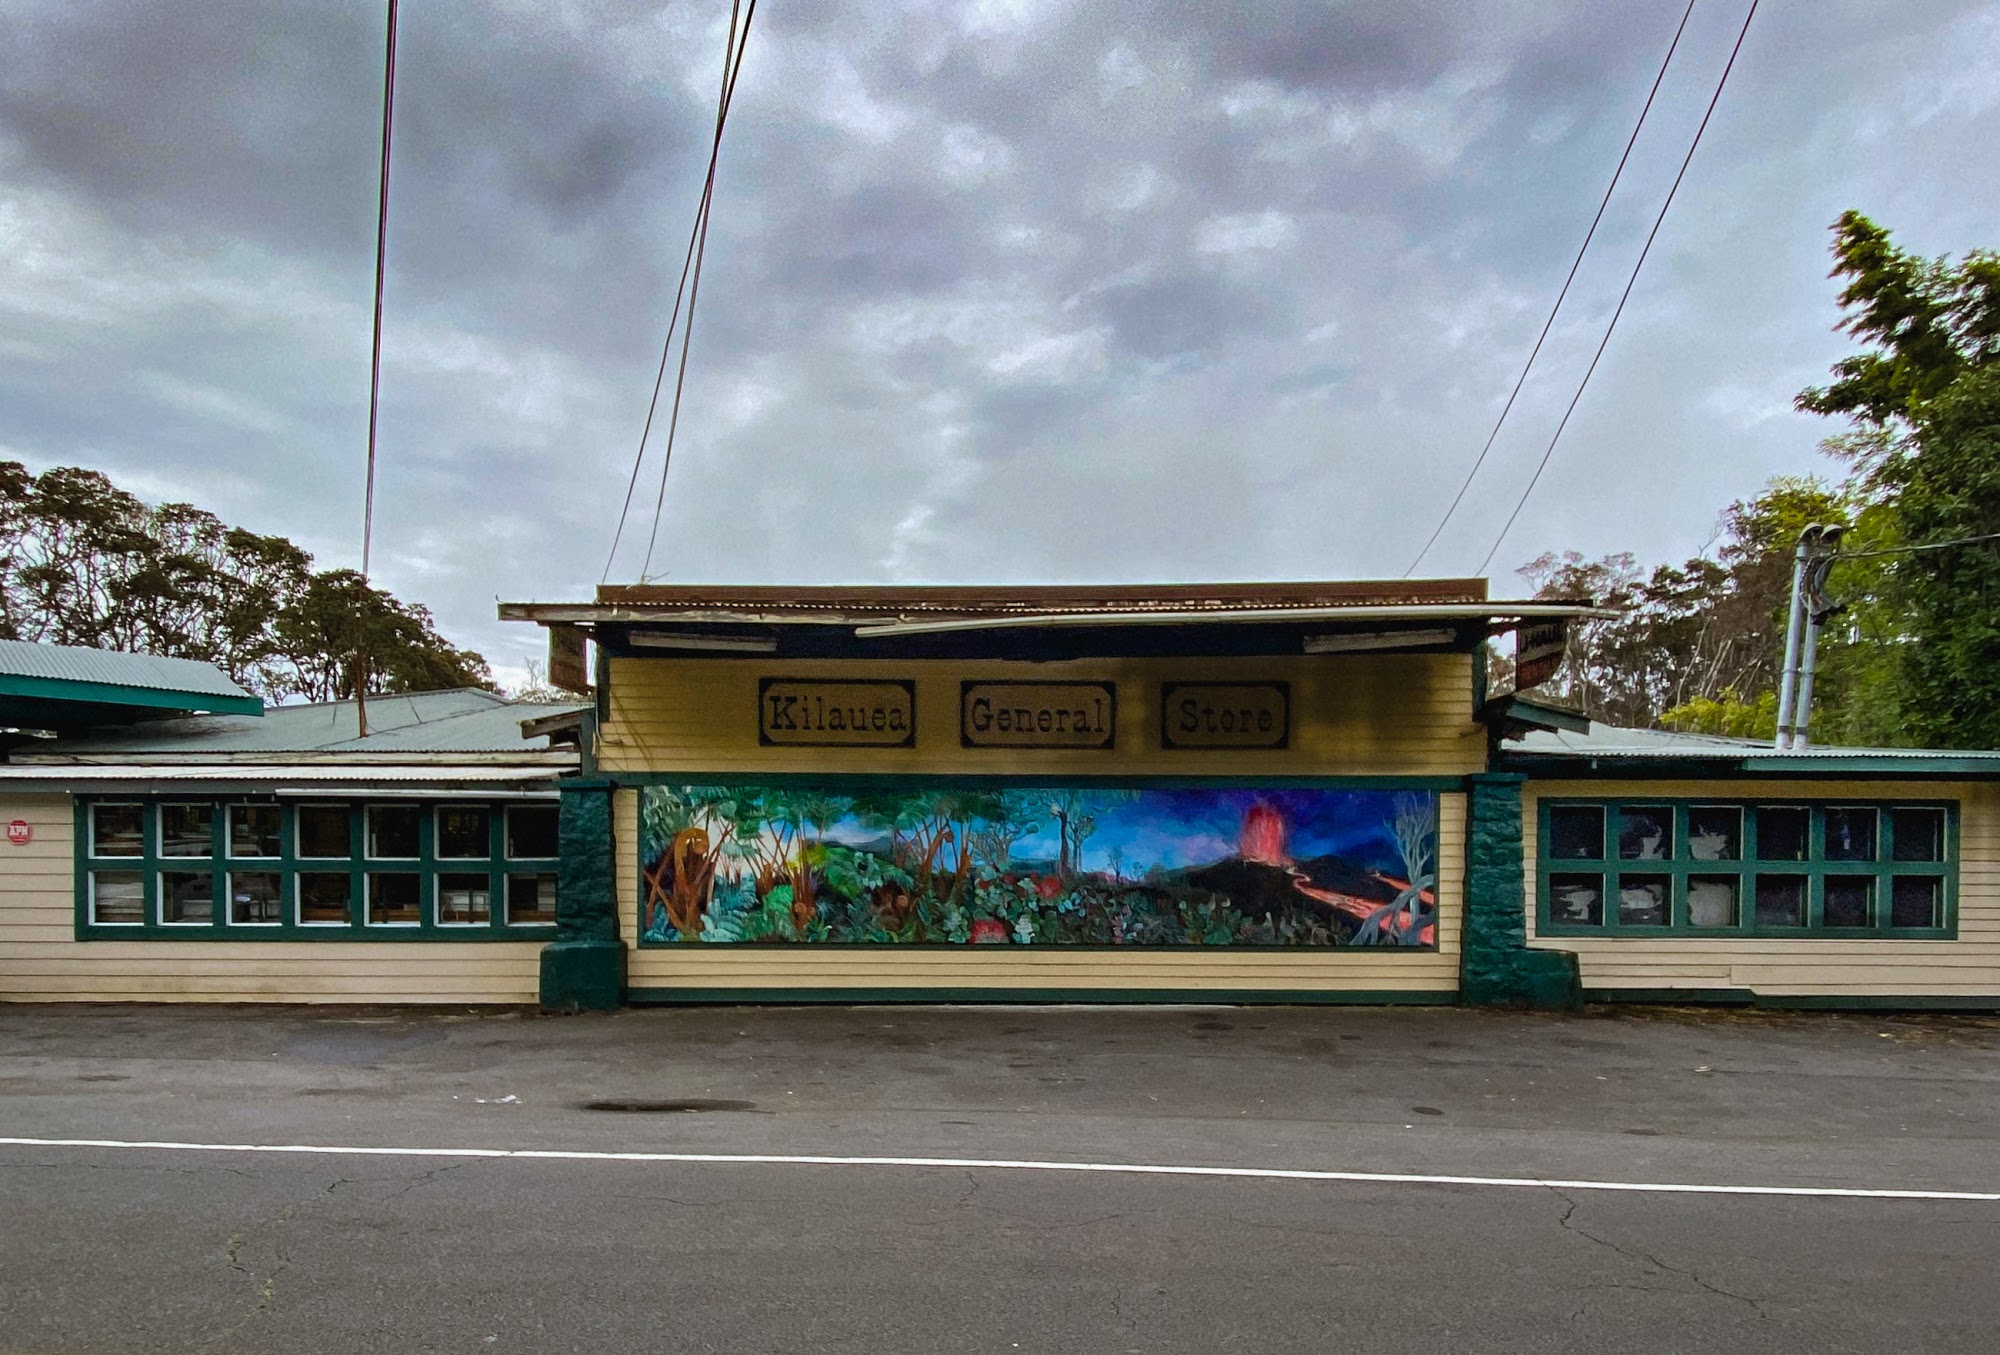 Kilauea General Store